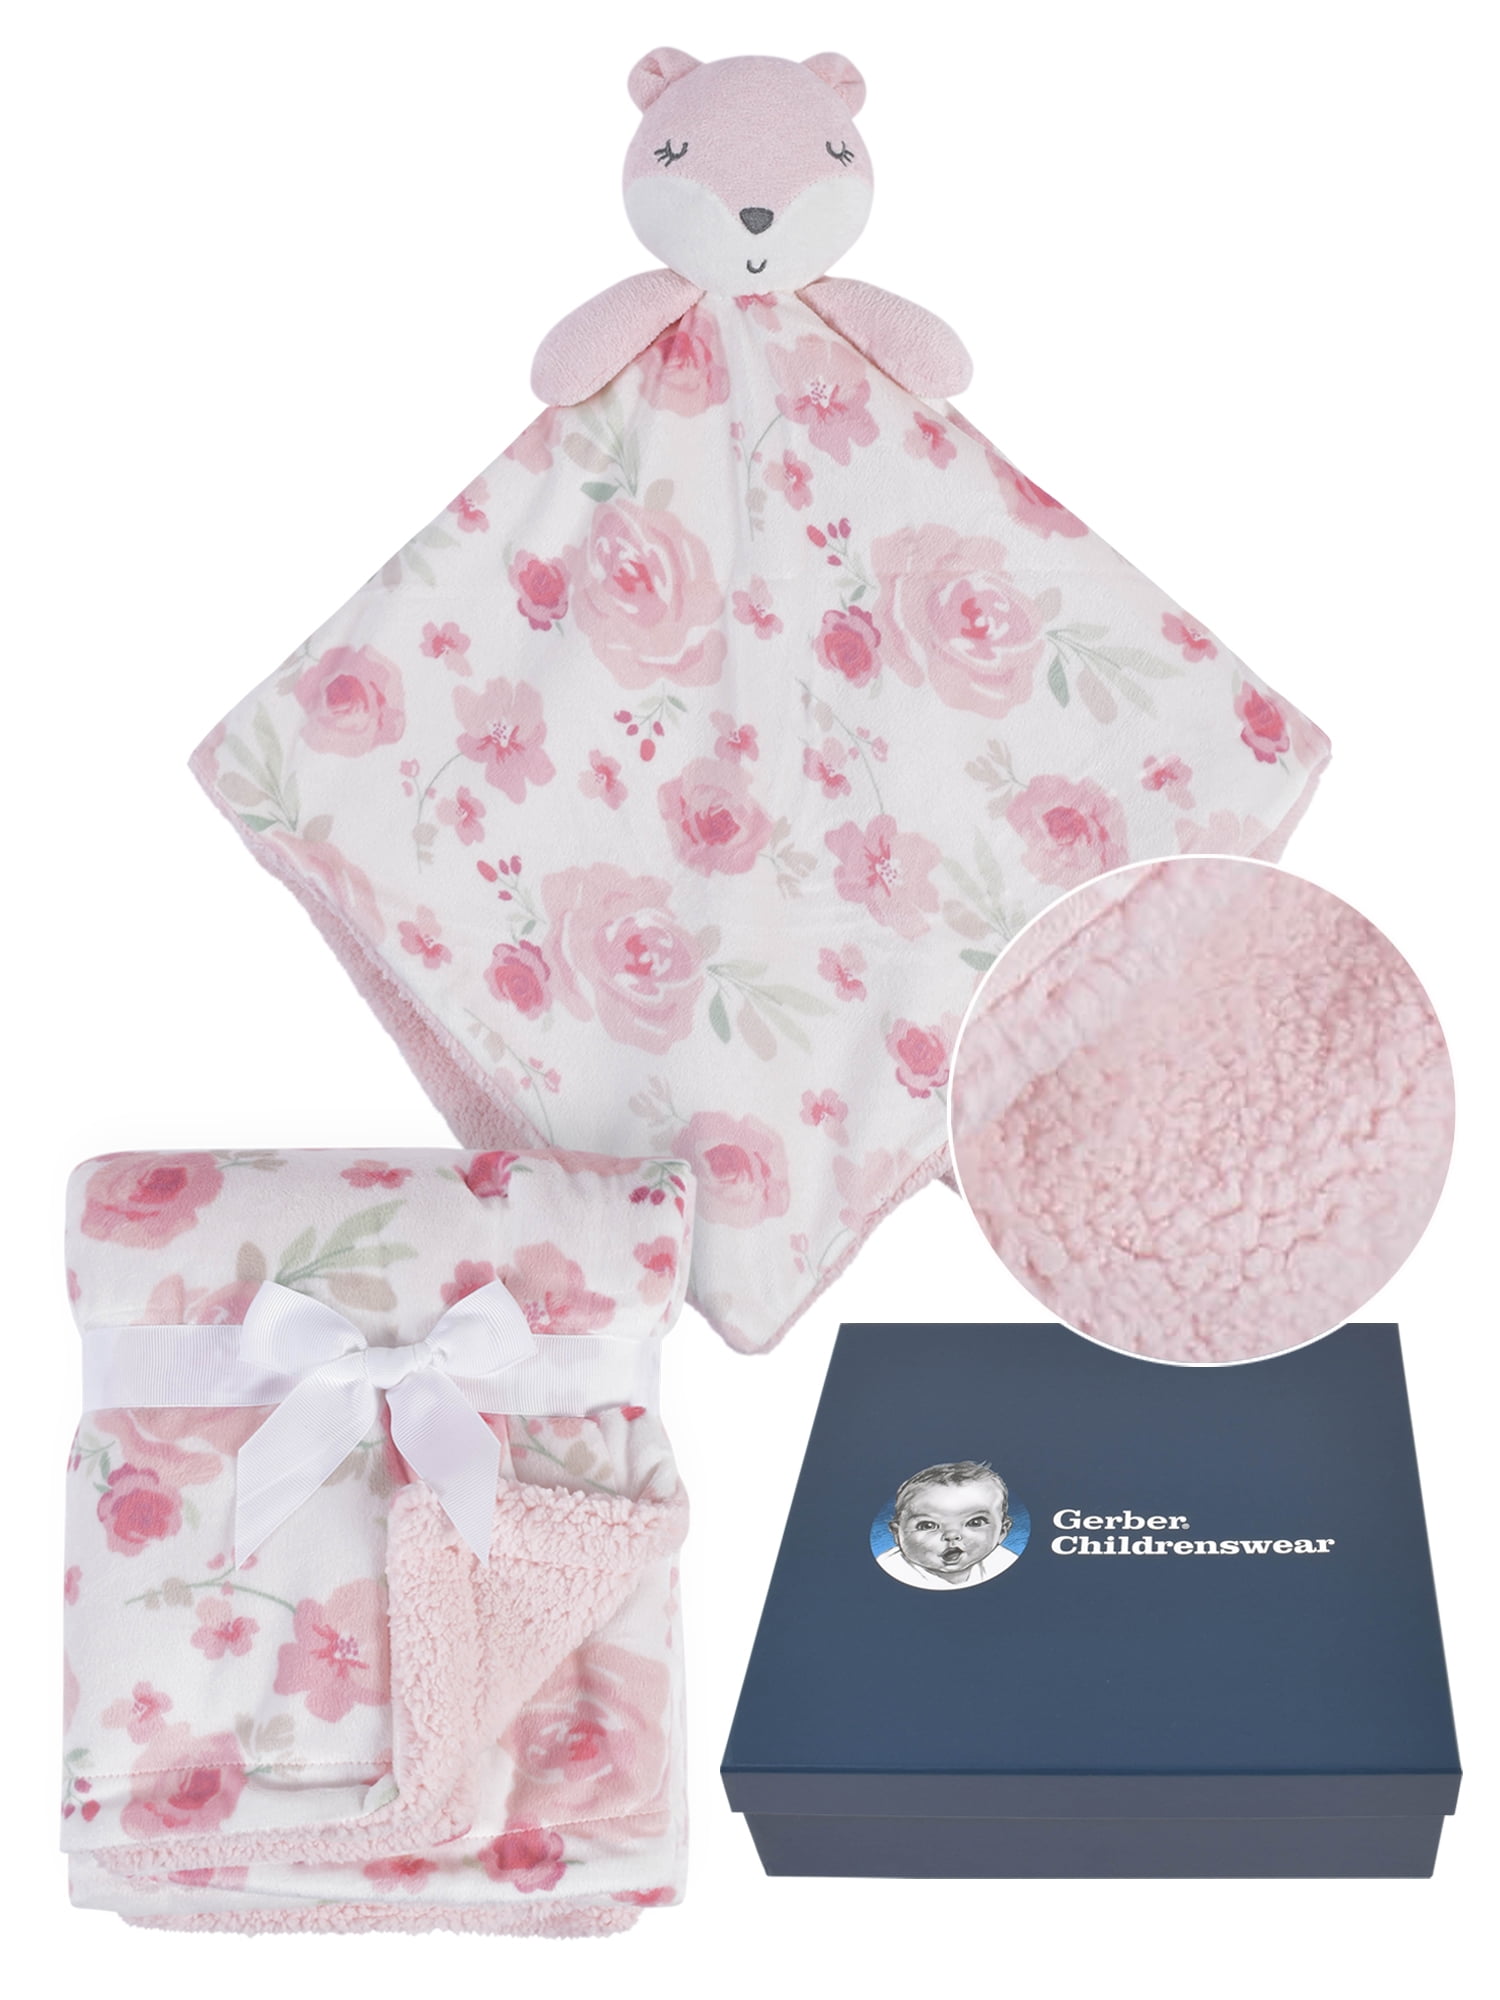 Gerber Baby Super Soft Plush Blanket & XL Security Blanket Set w/ Gift Box (Pink) $14.50  + Free S&H w/ Walmart+ or $35+